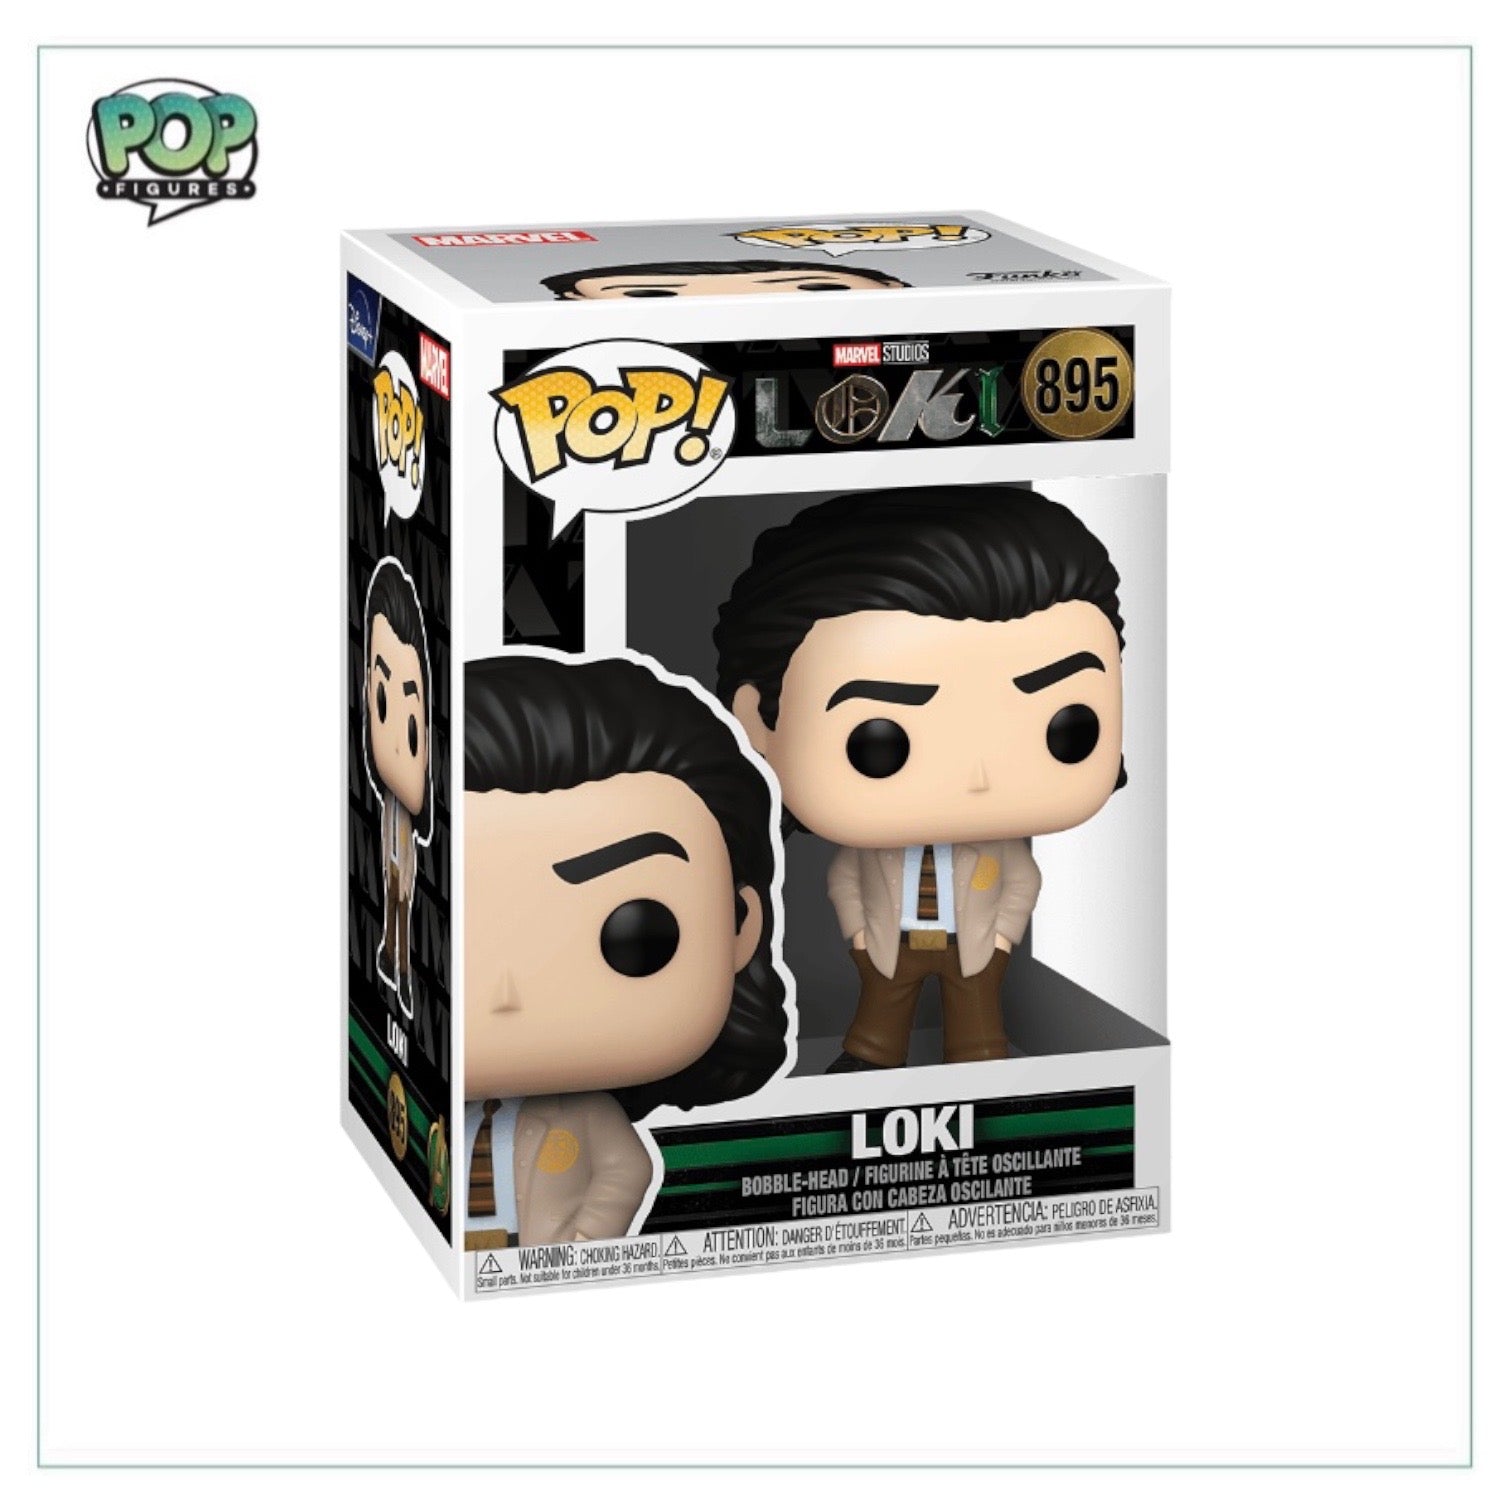 Loki #895 Funko Pop! - Loki